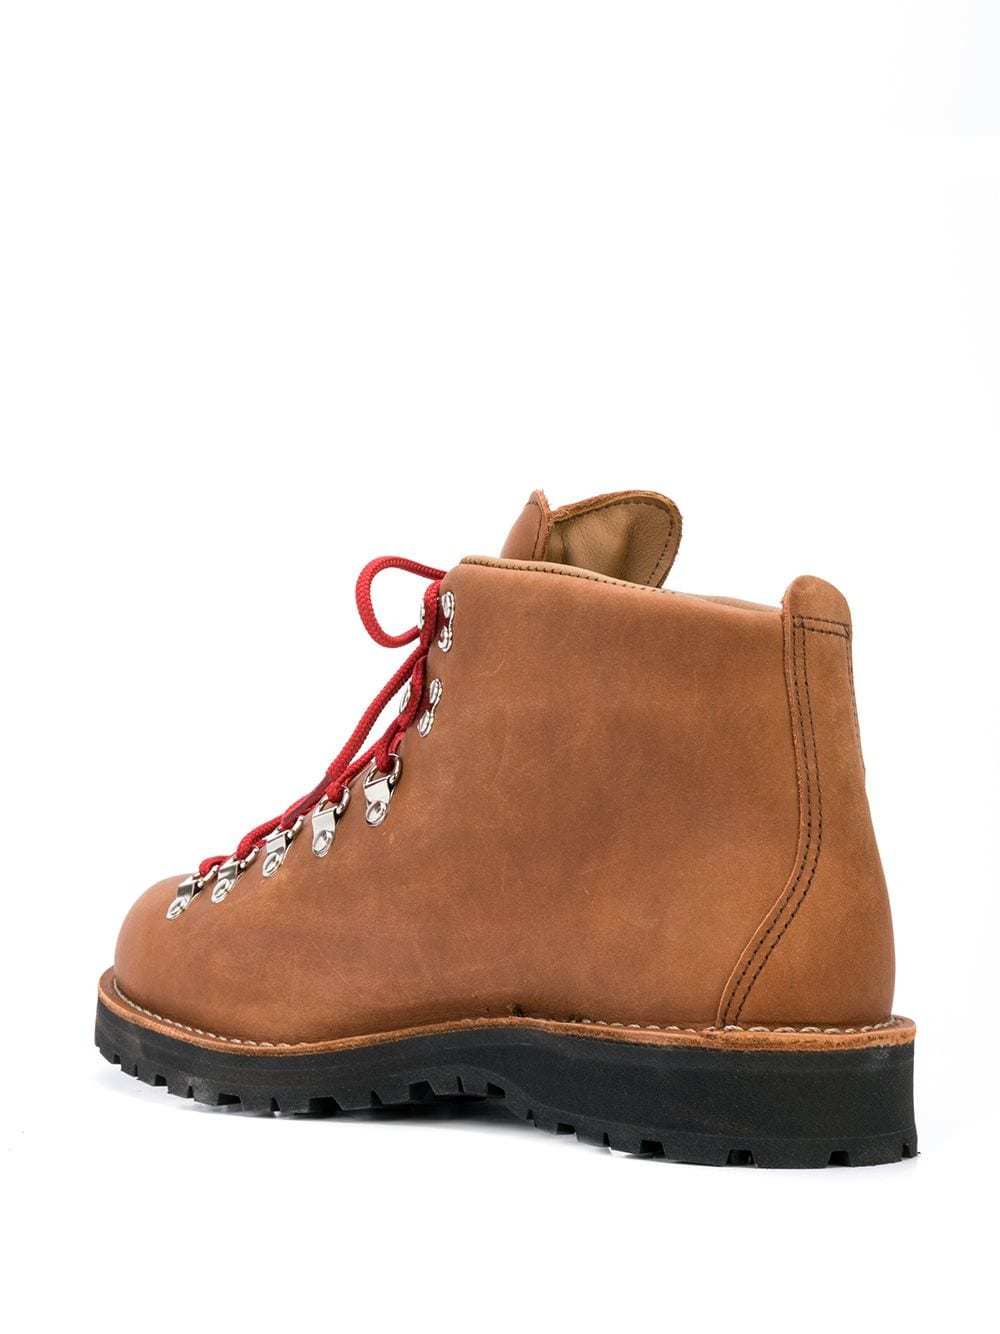 Danner Mountain Light Boots, $368 | farfetch.com | Lookastic